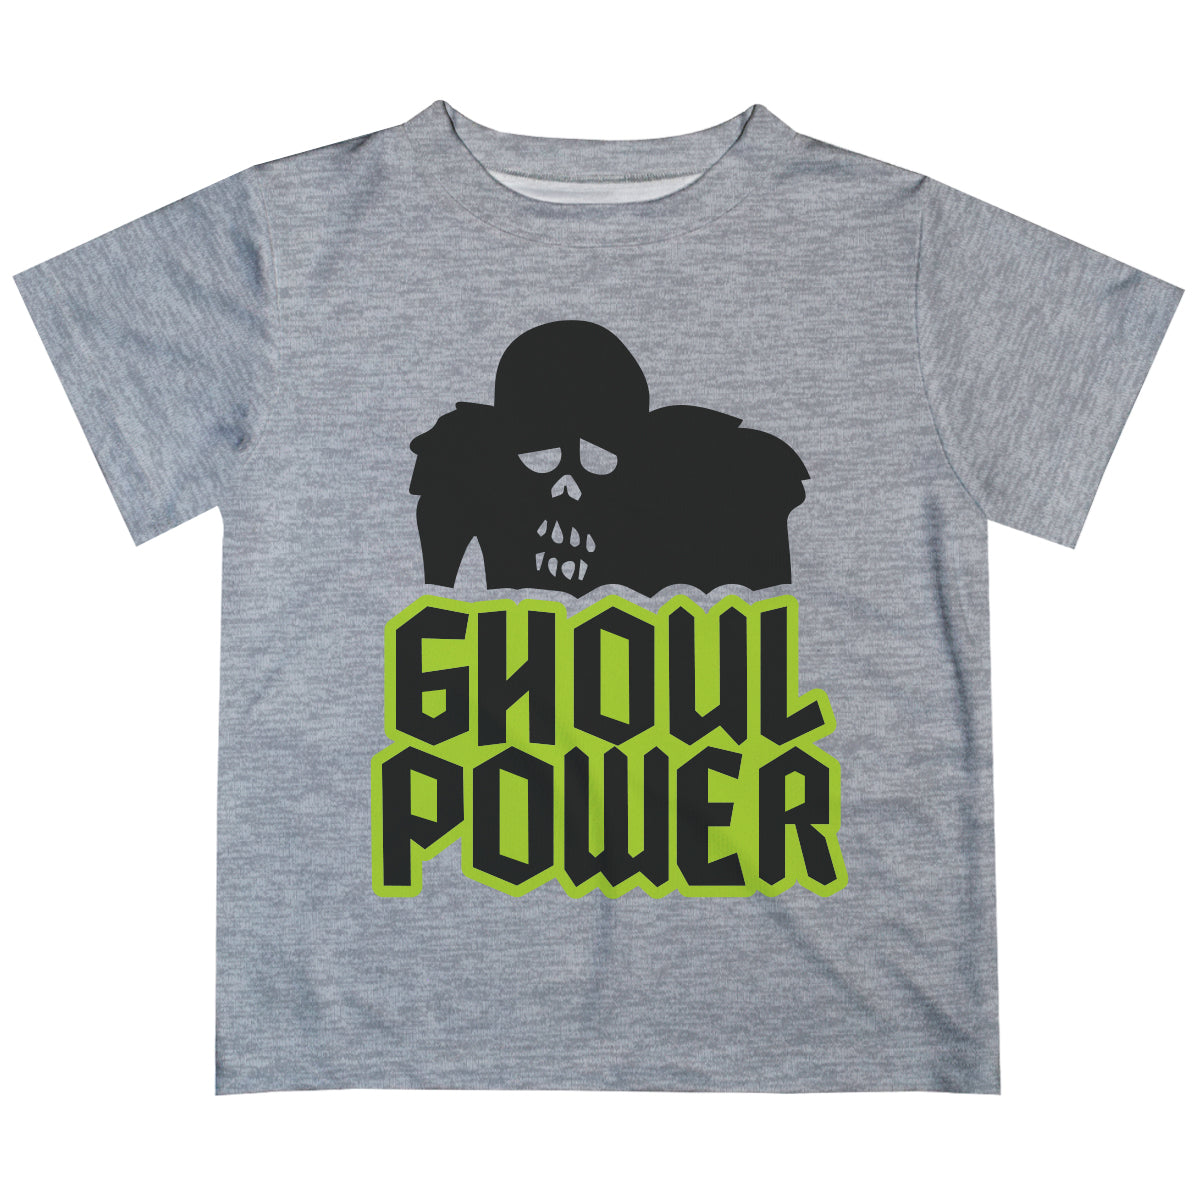 Ghoul Power Gray Short Sleeve Tee Shirt